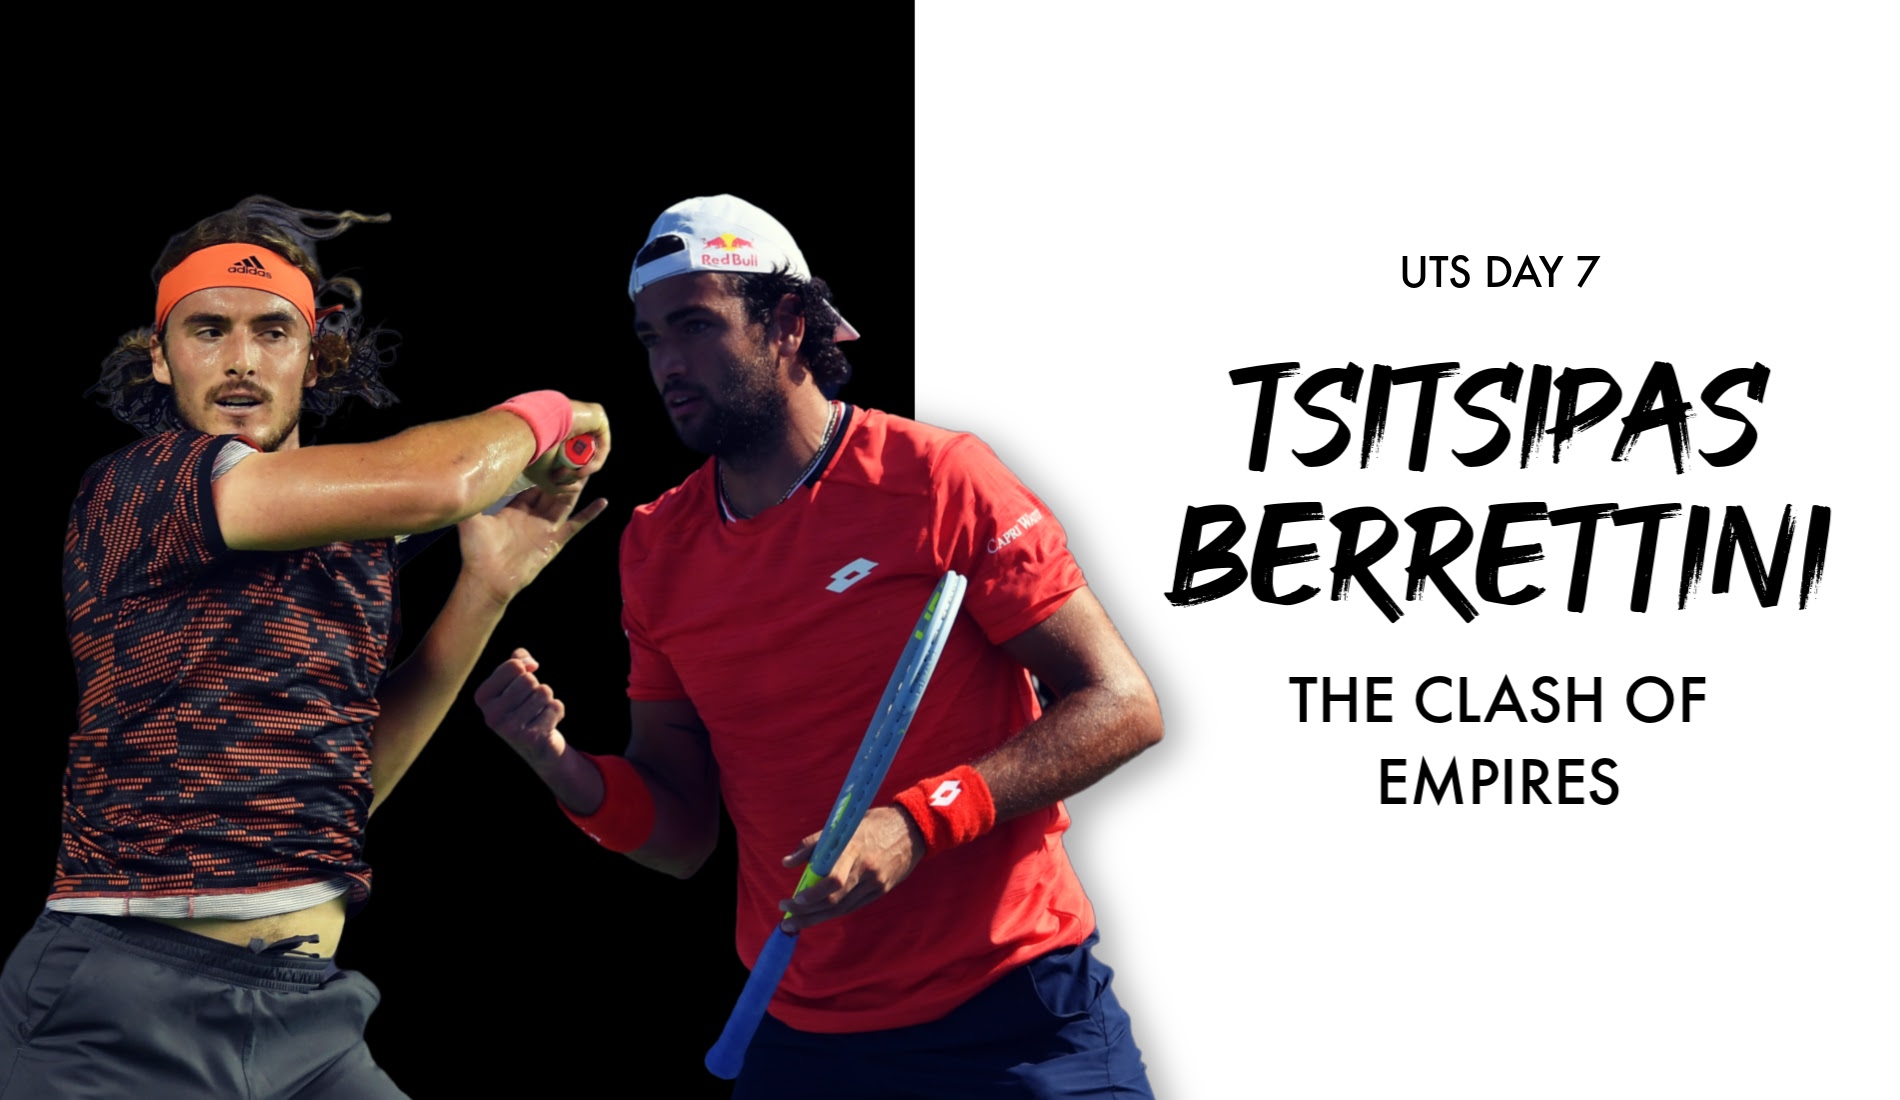 UTS1 - Day 7: Stefanos Tsitsipas "The Greek God" vs Matteo Berrettini "The Hammer"